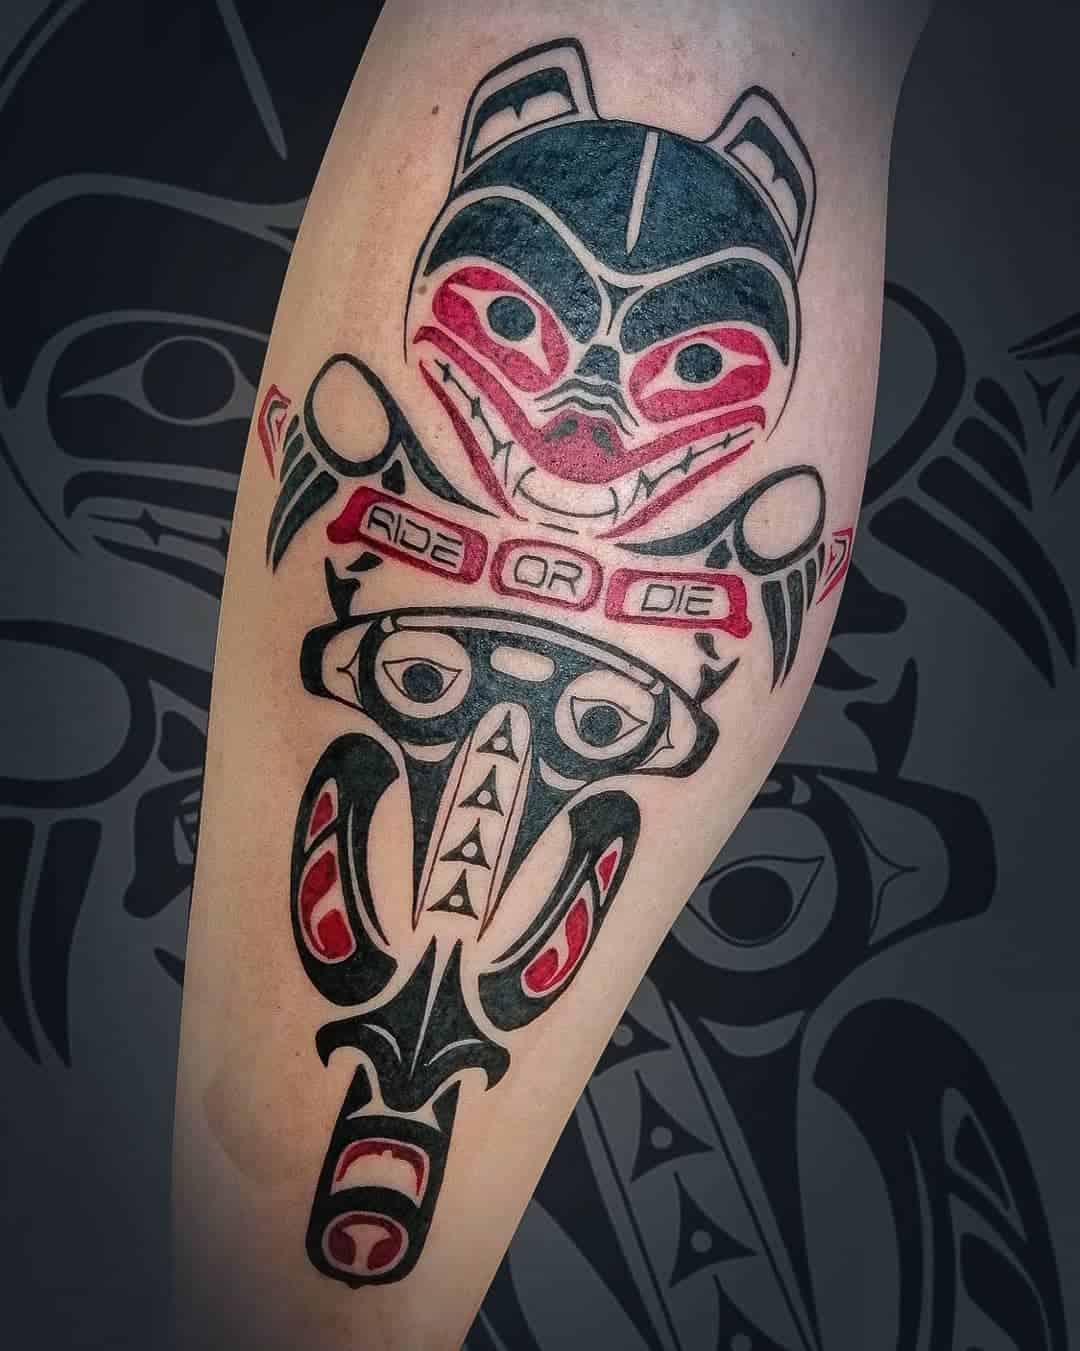 Haida tattoo meaning